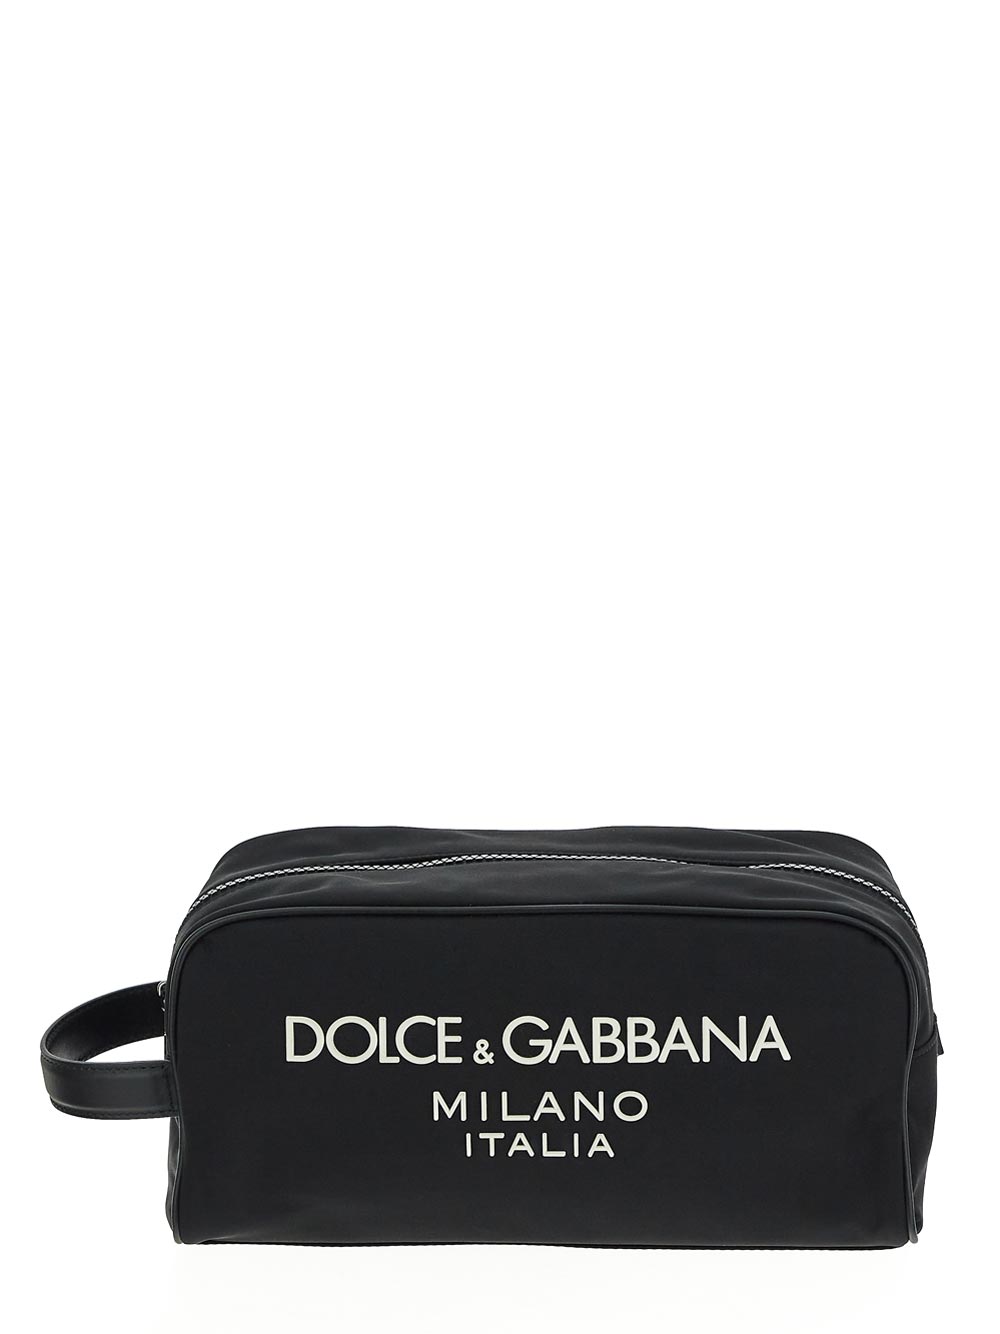 Dolce & Gabbana Nylon Toiletry Bag With Rubberized Logo